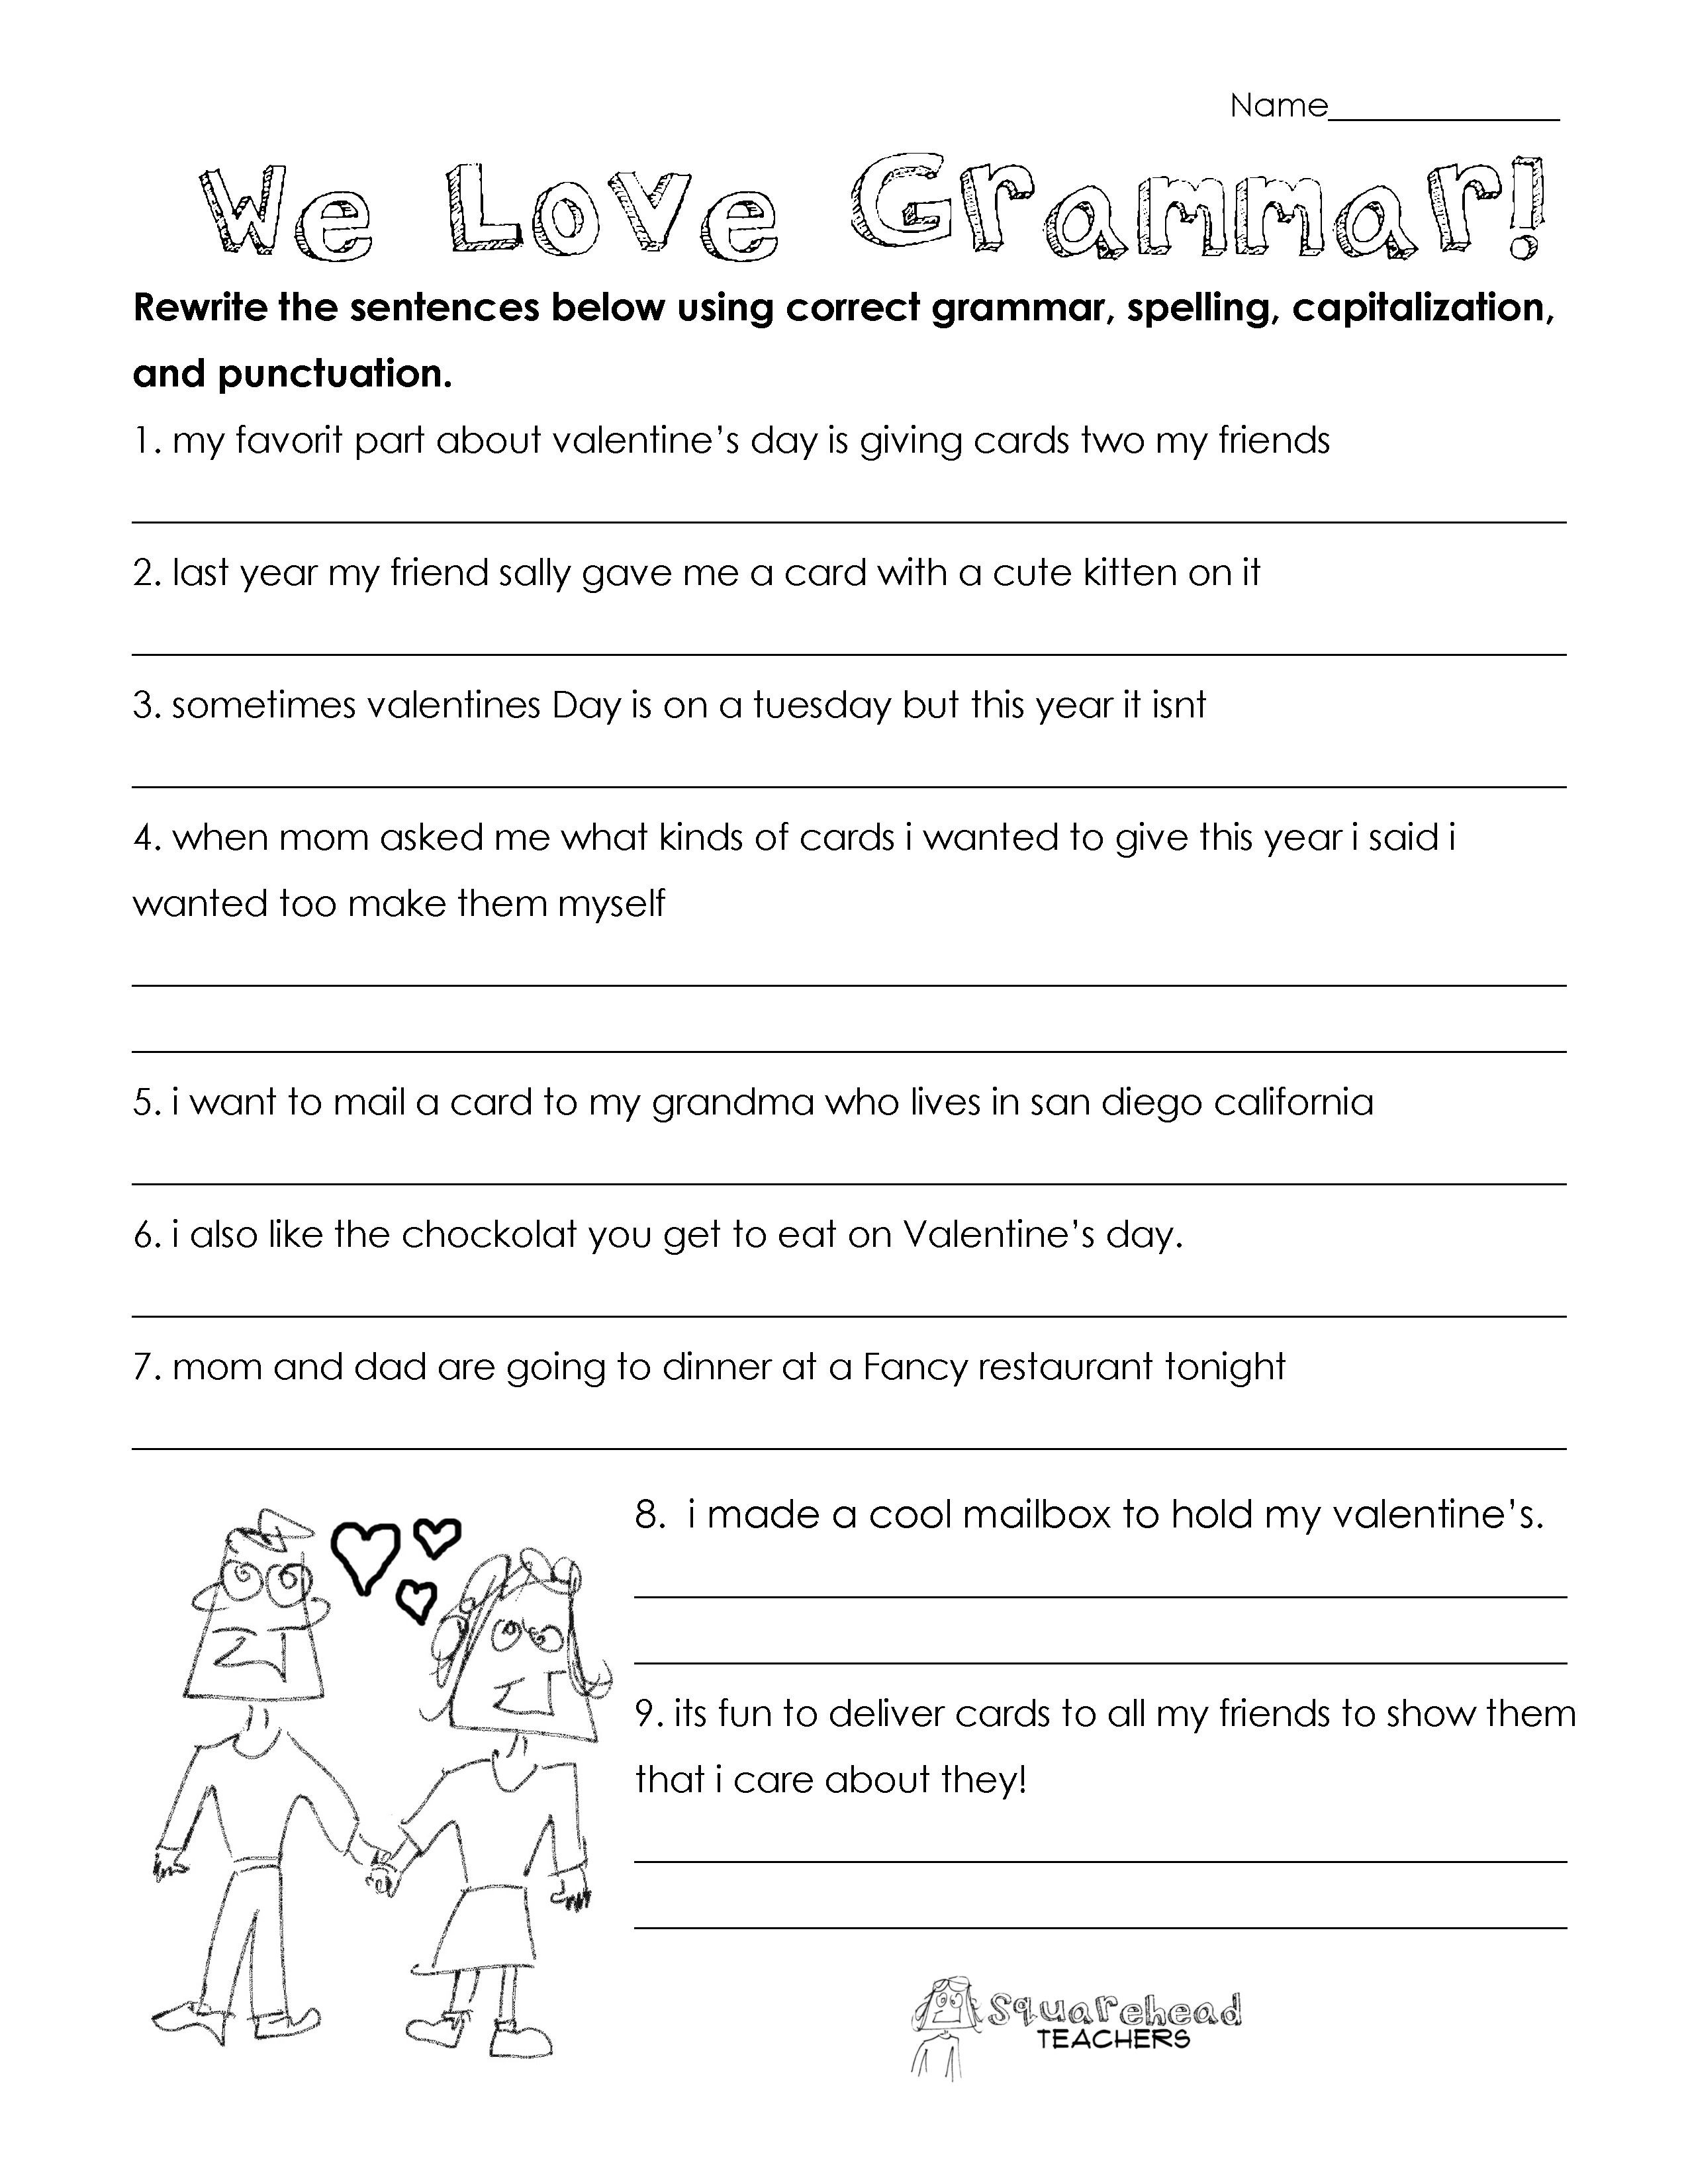 Third Grade Grammar Worksheets Valentine S Day Grammar Free Worksheet for 3rd Grade and Up